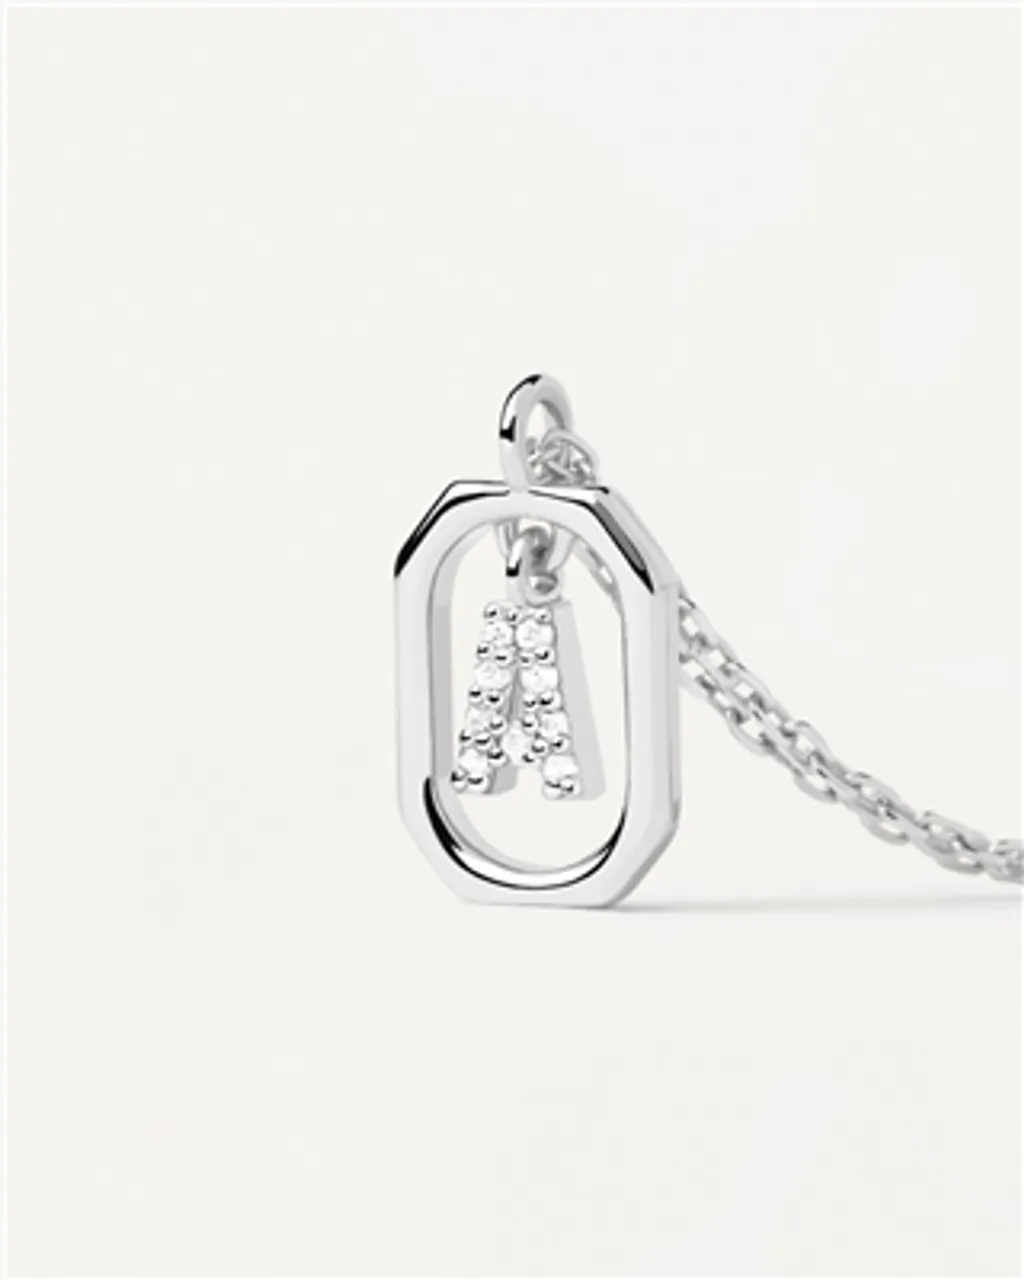 PDPAOLA Silver Mini Letter Necklace - Letter K